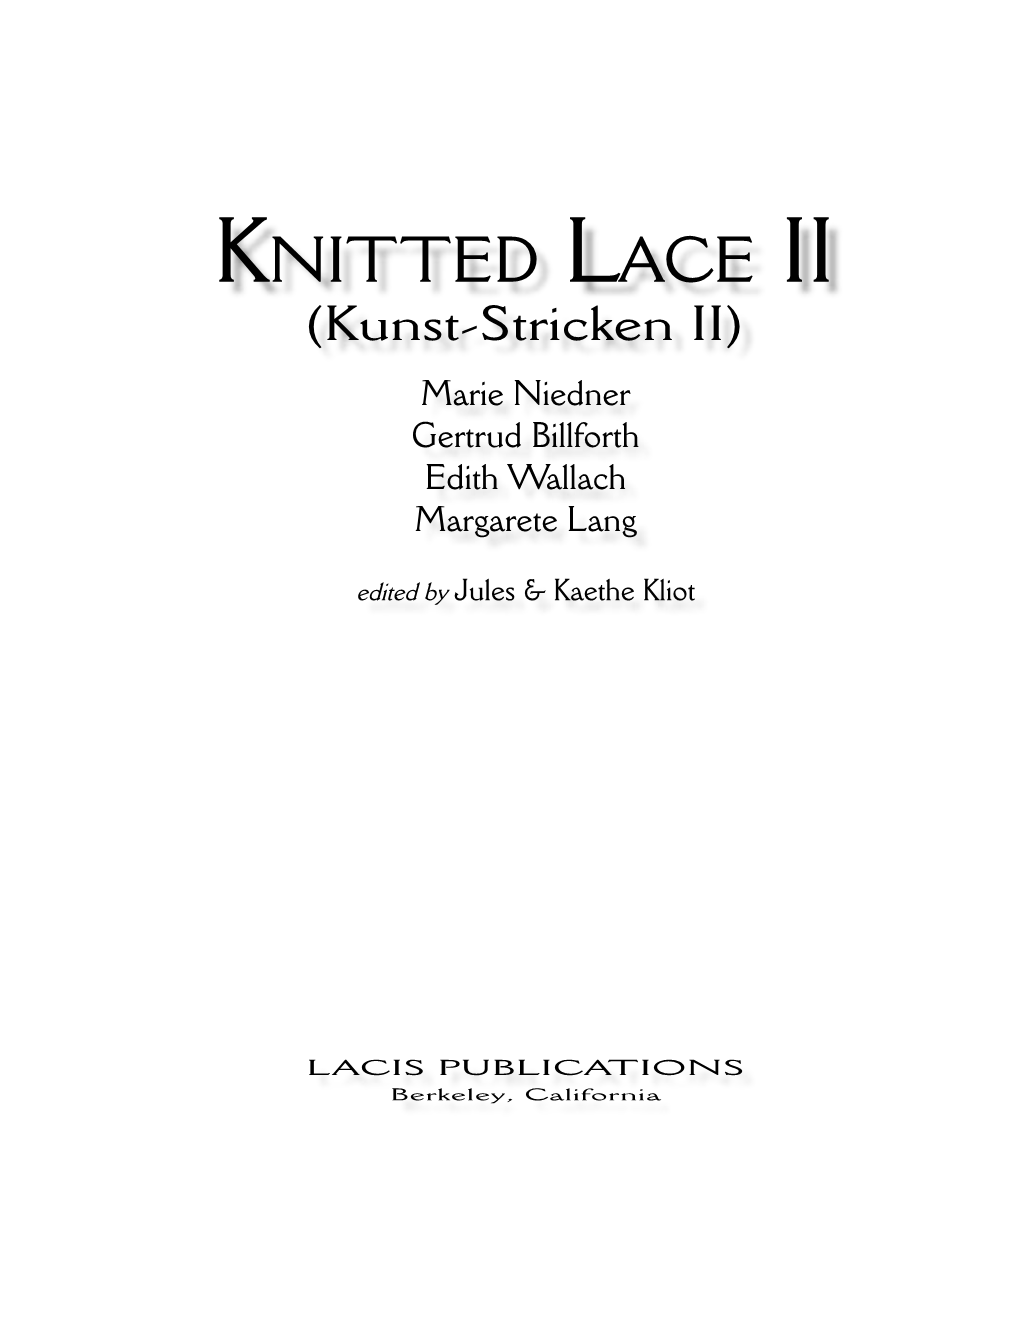 Knitted Lace II (Kunst-Stricken II) Marie Niedner Gertrud Billforth Edith Wallach Margarete Lang